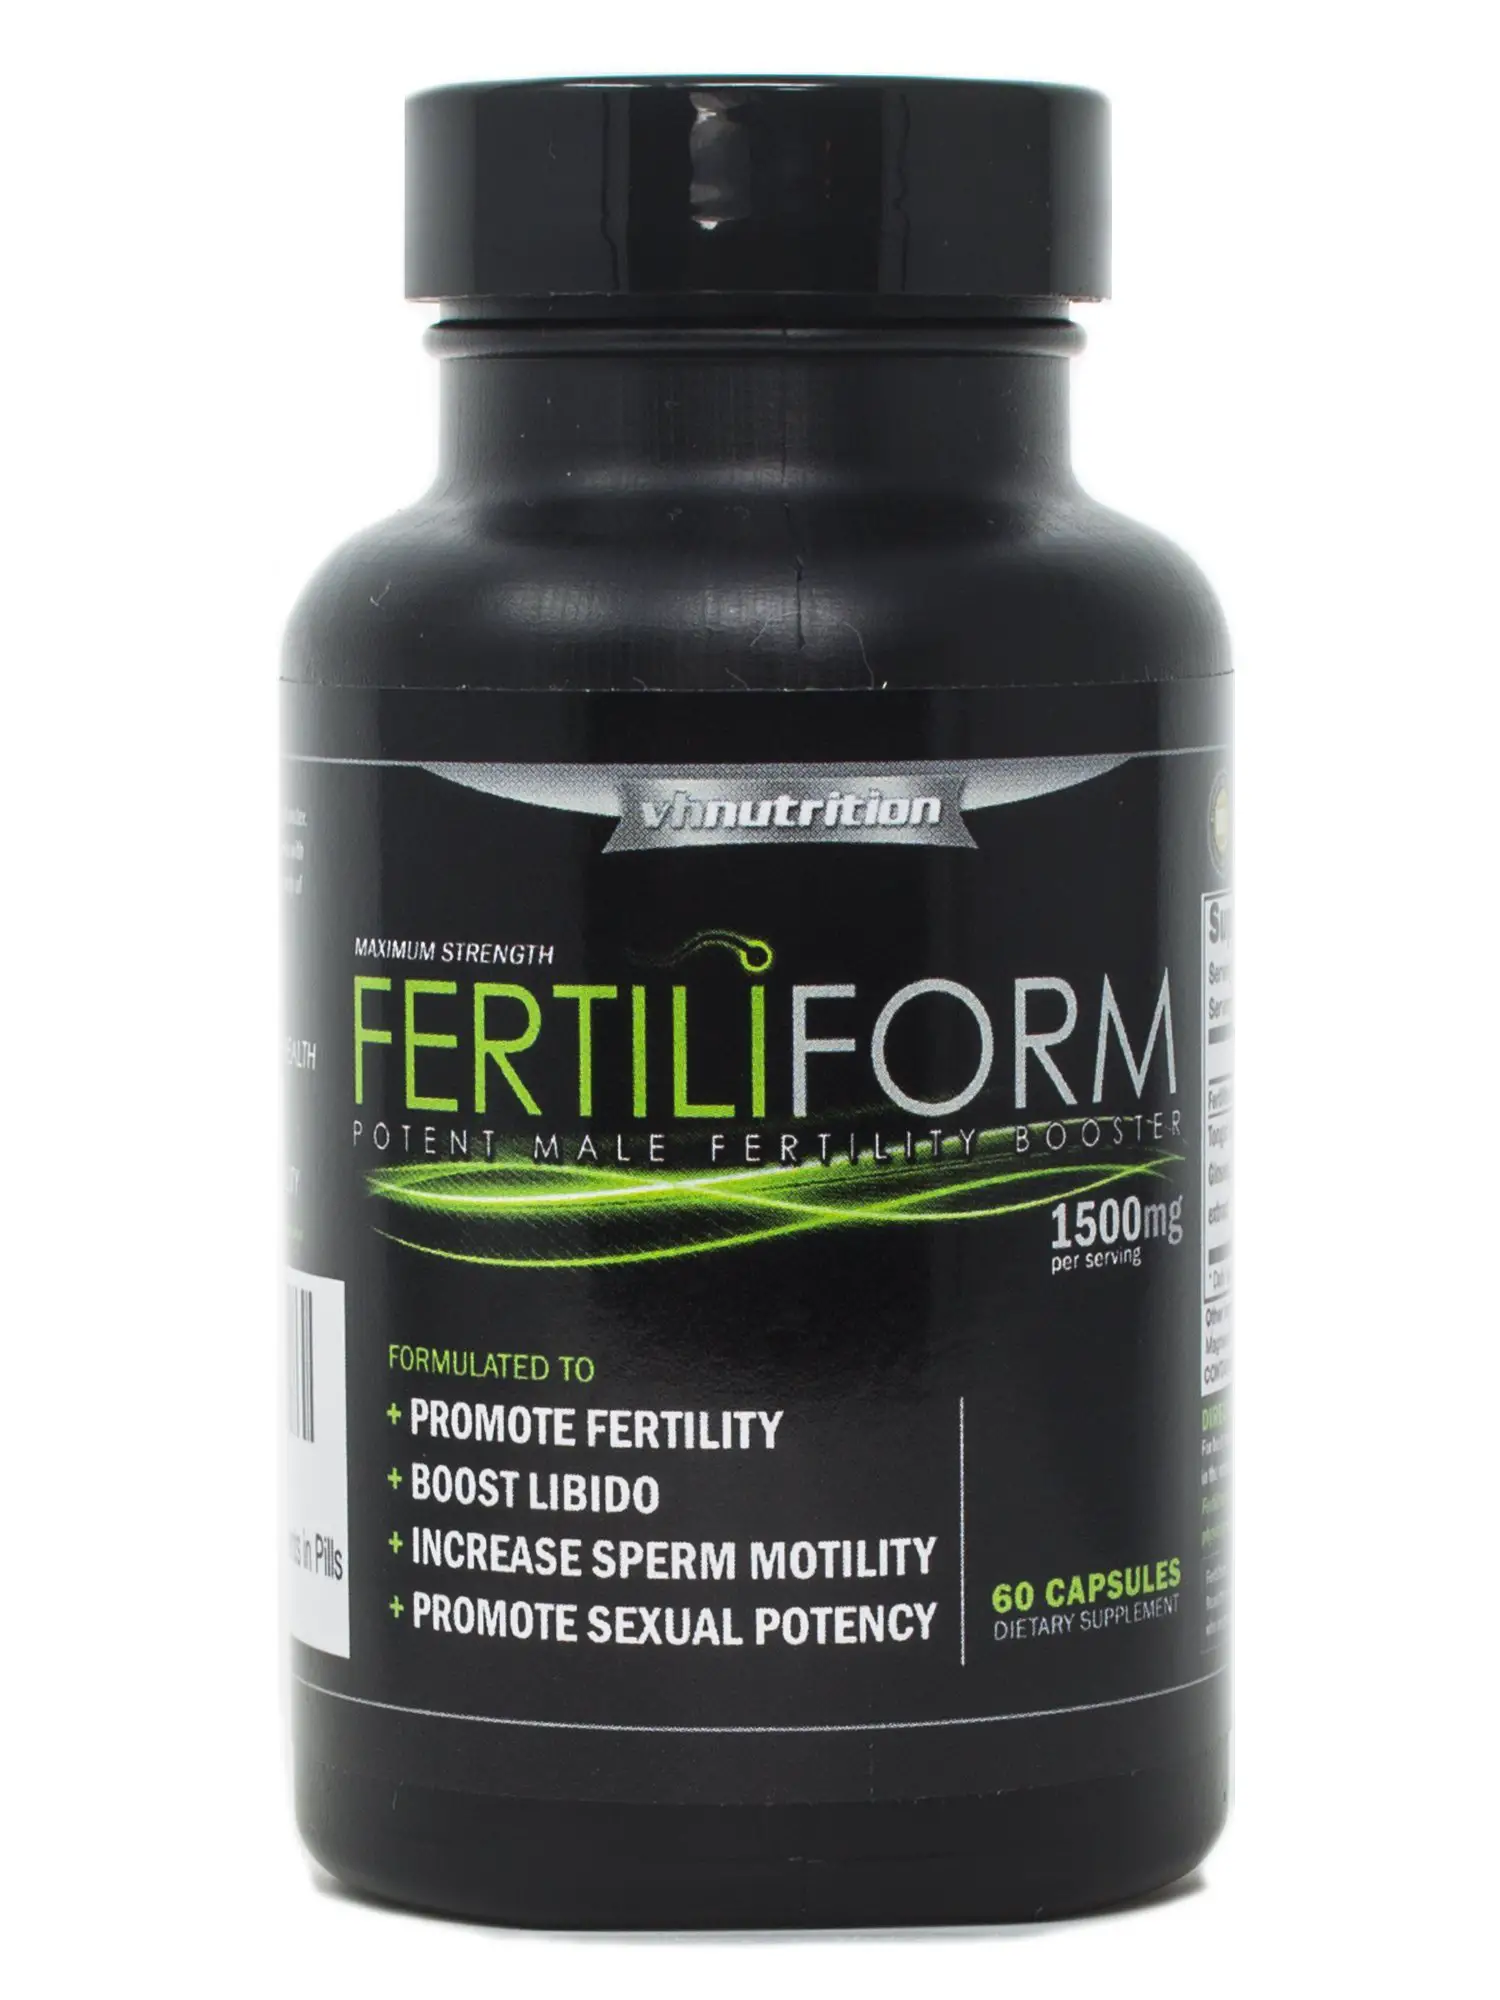 FertiliForm Mens/Male Fertility Supplement